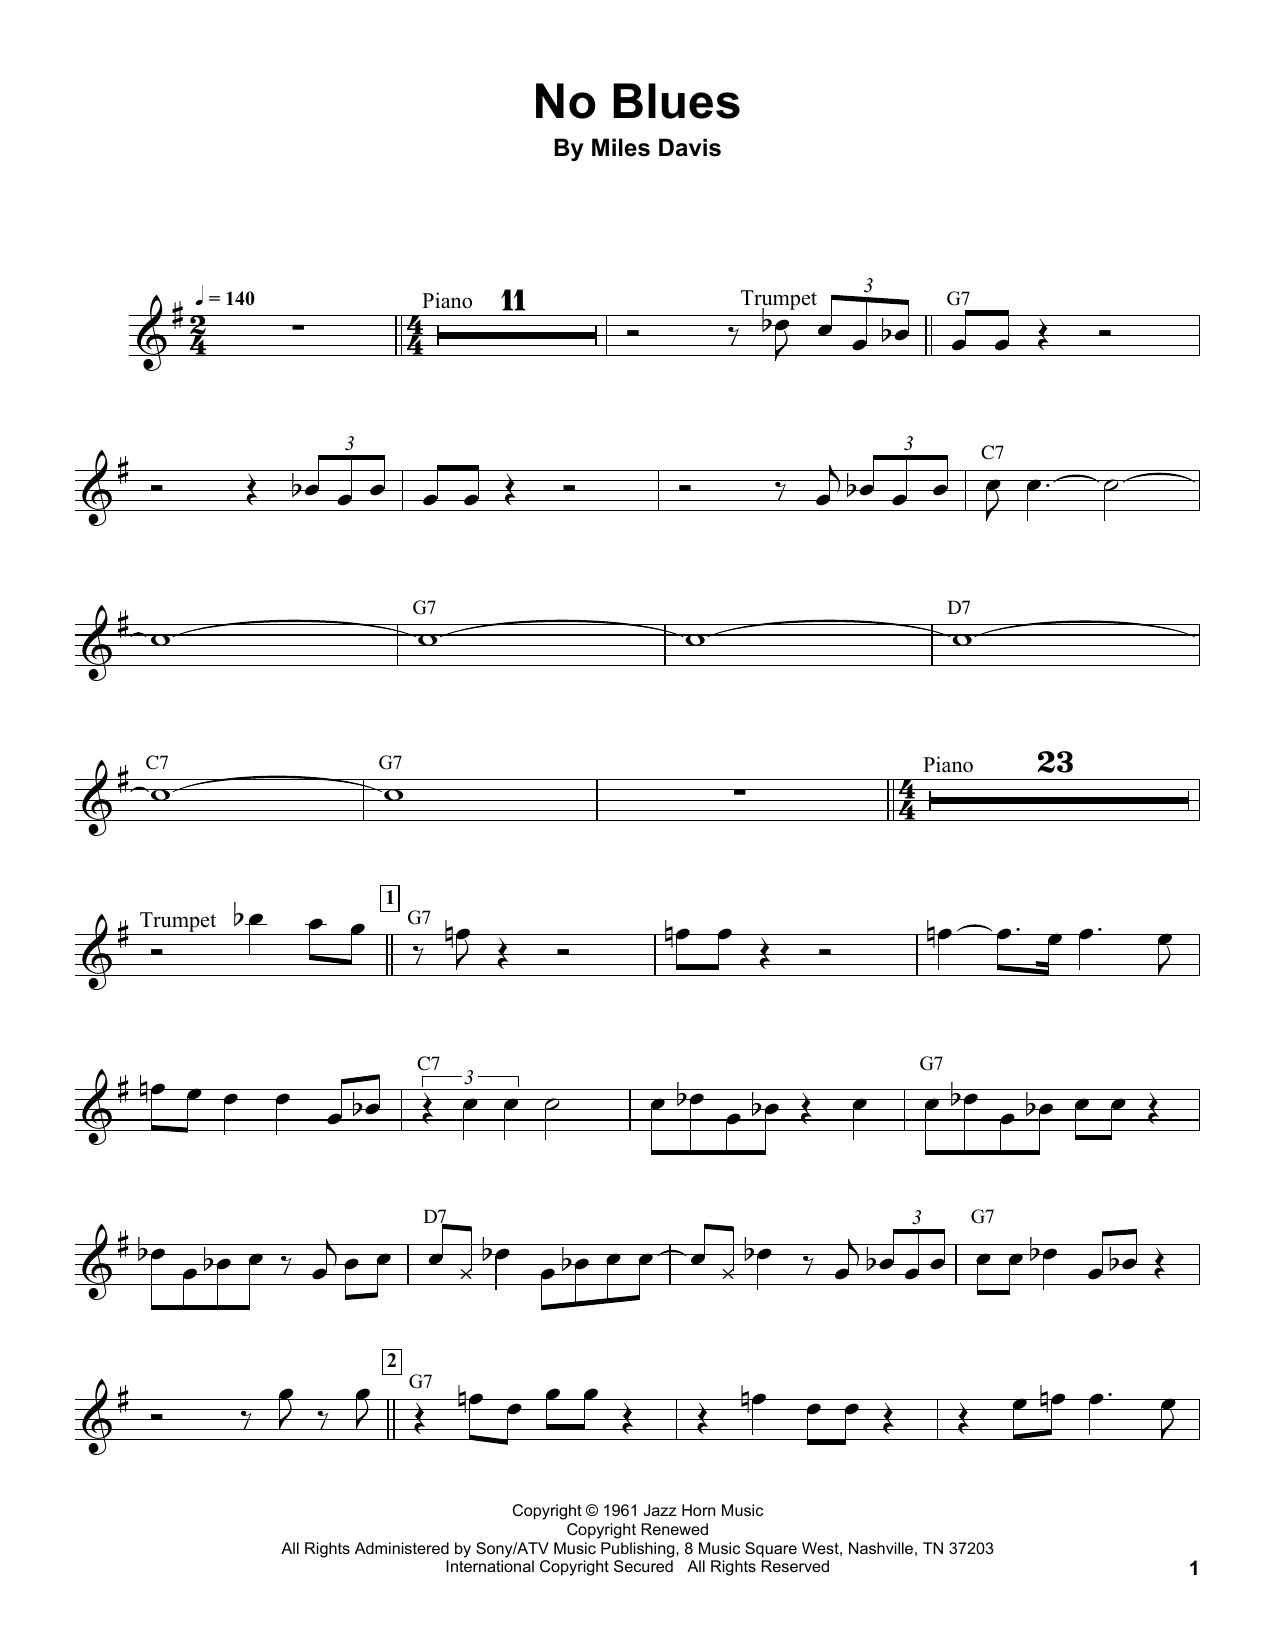 Miles Davis No Blues Sheet Music Notes & Chords for Trumpet Transcription - Download or Print PDF